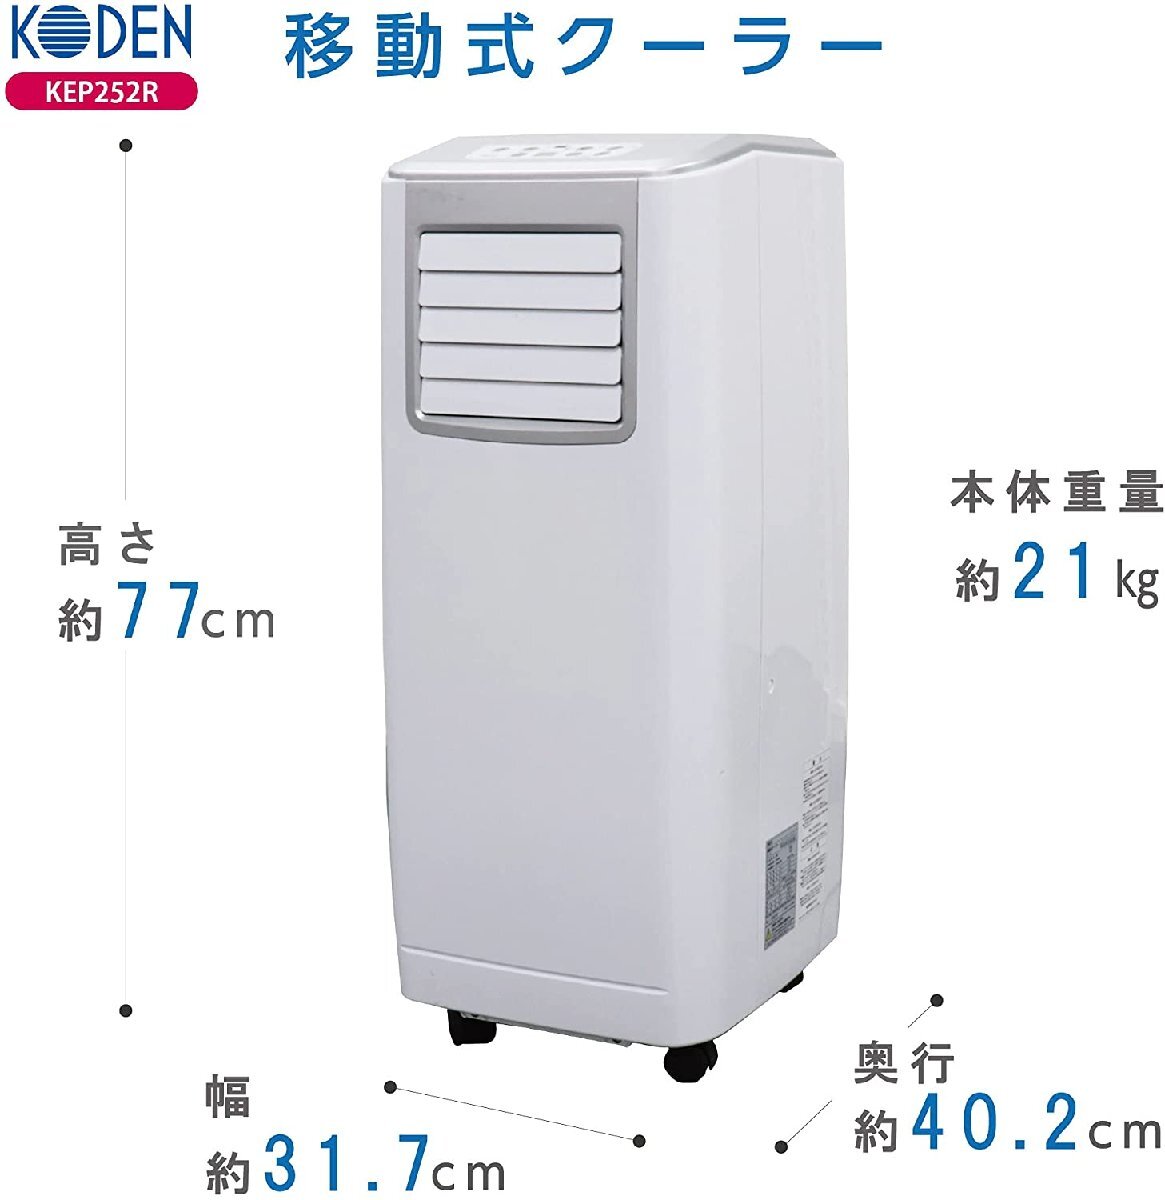 KODEN/ 広電 ◆移動式 クーラー エアコン 【KEP252R 】ノンドレン式 床置型 空調 2021年製